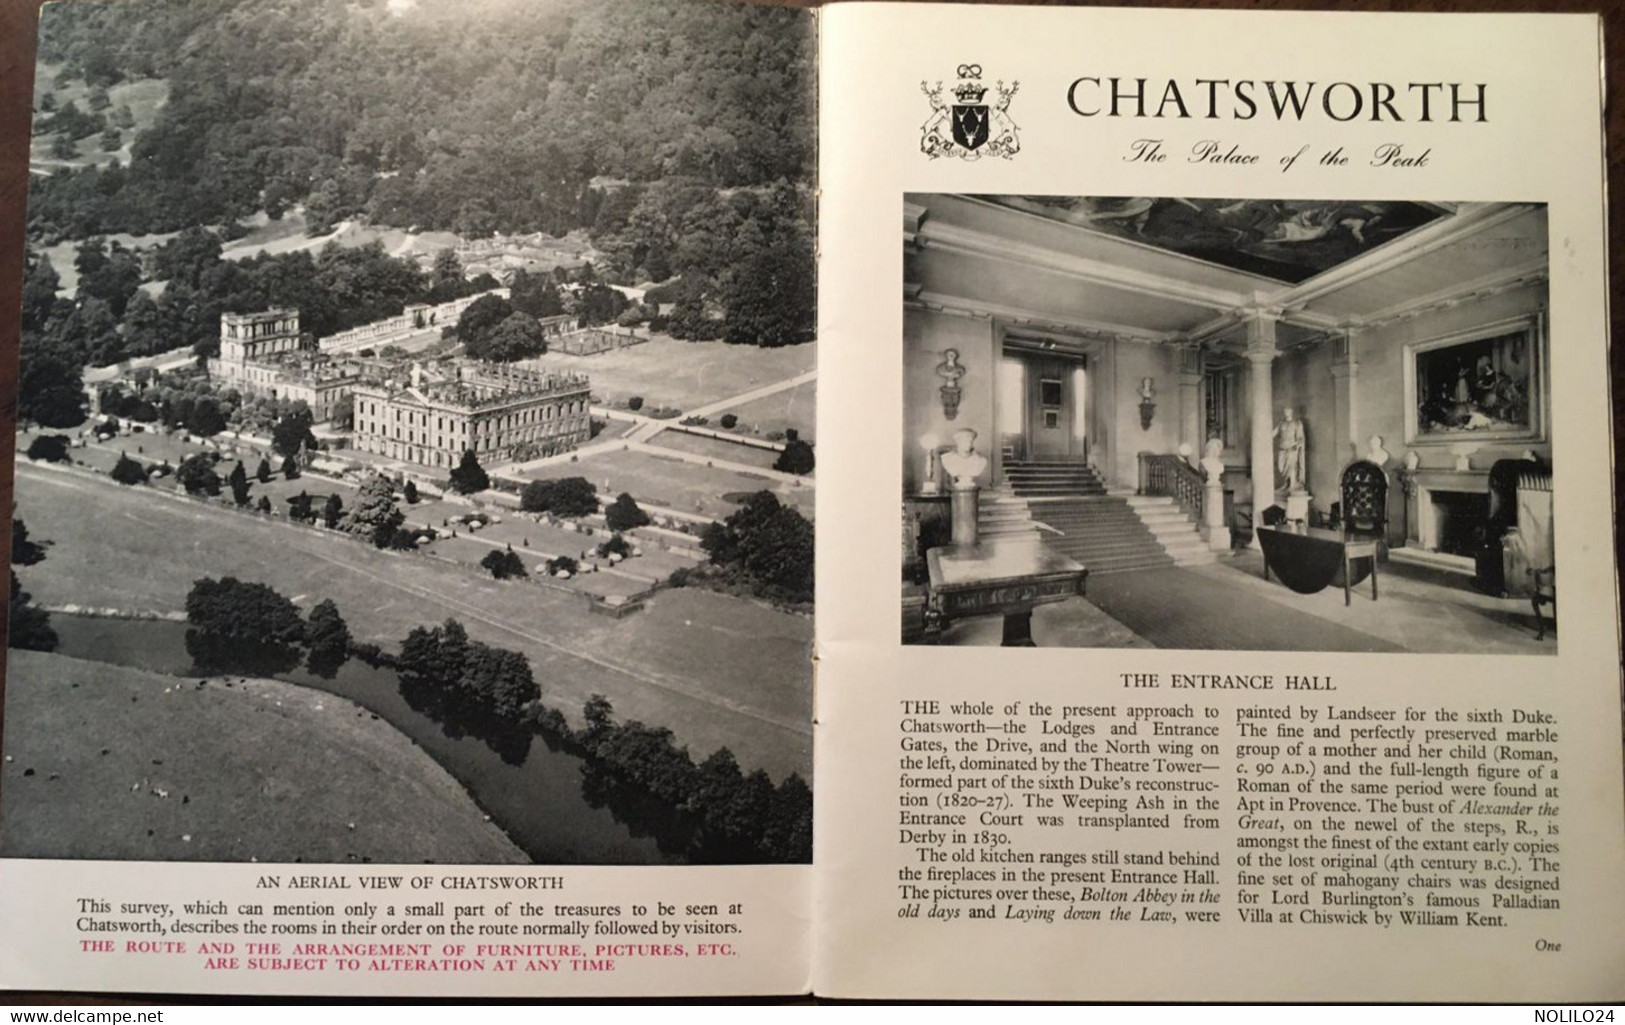 Revue Publication Guide CHATSWORTH The Derbyshire Home Of The Dukes Of DEVONSHIRE - Kultur